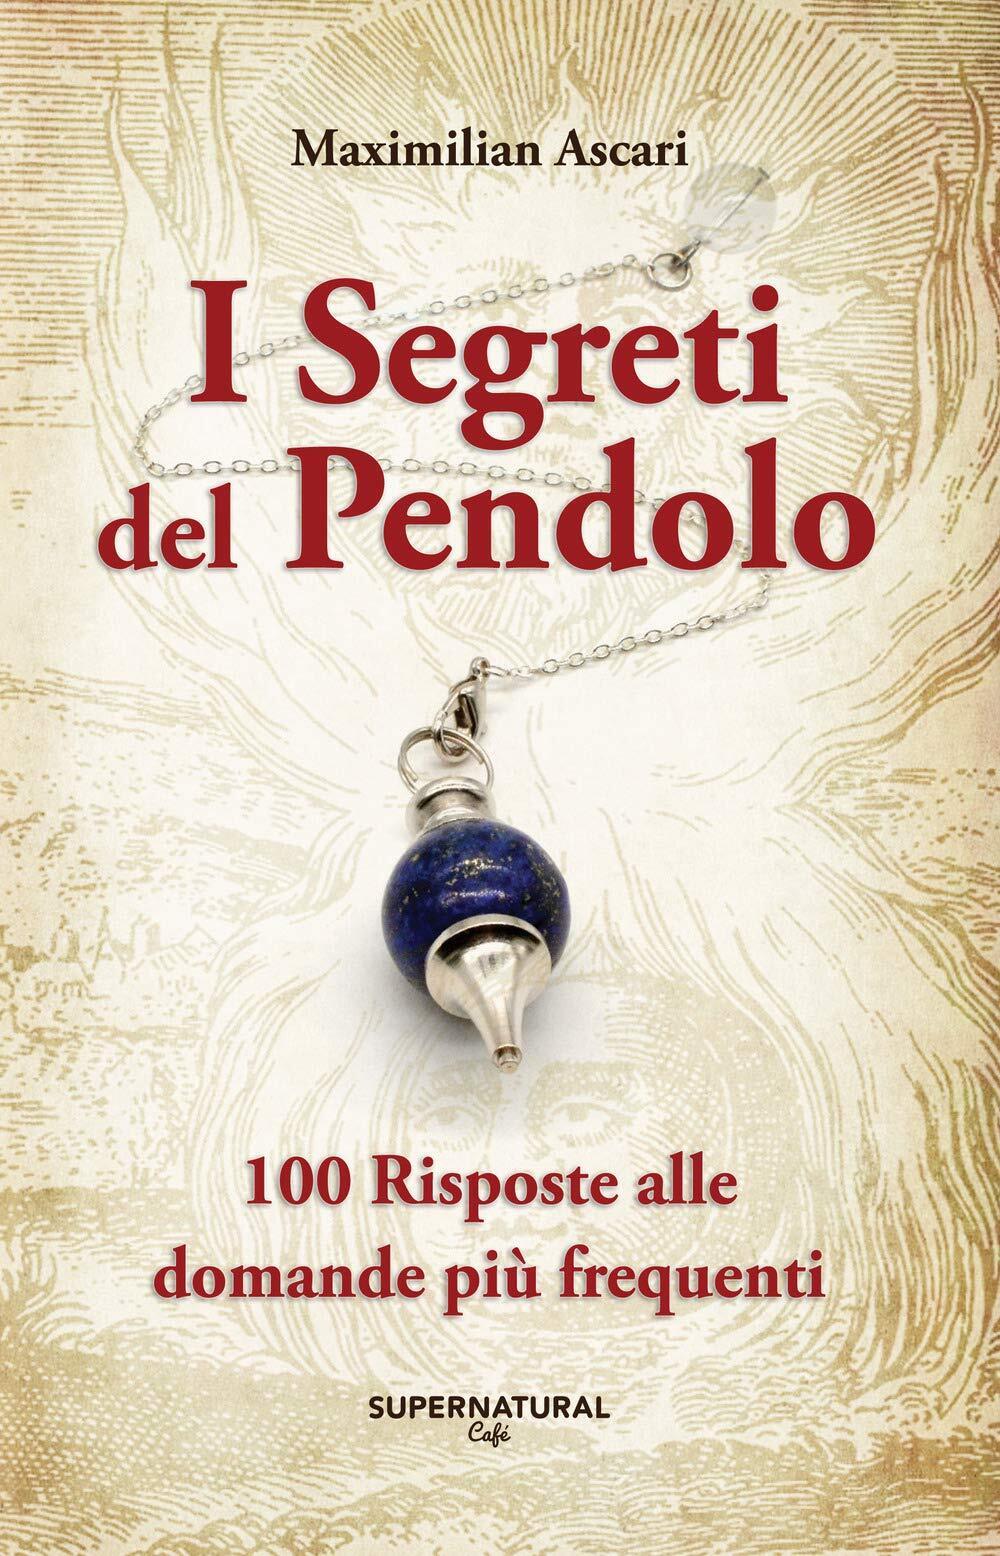 I segreti del pendolo - Maximilian Ascari - Supernatural Caf?, 2019